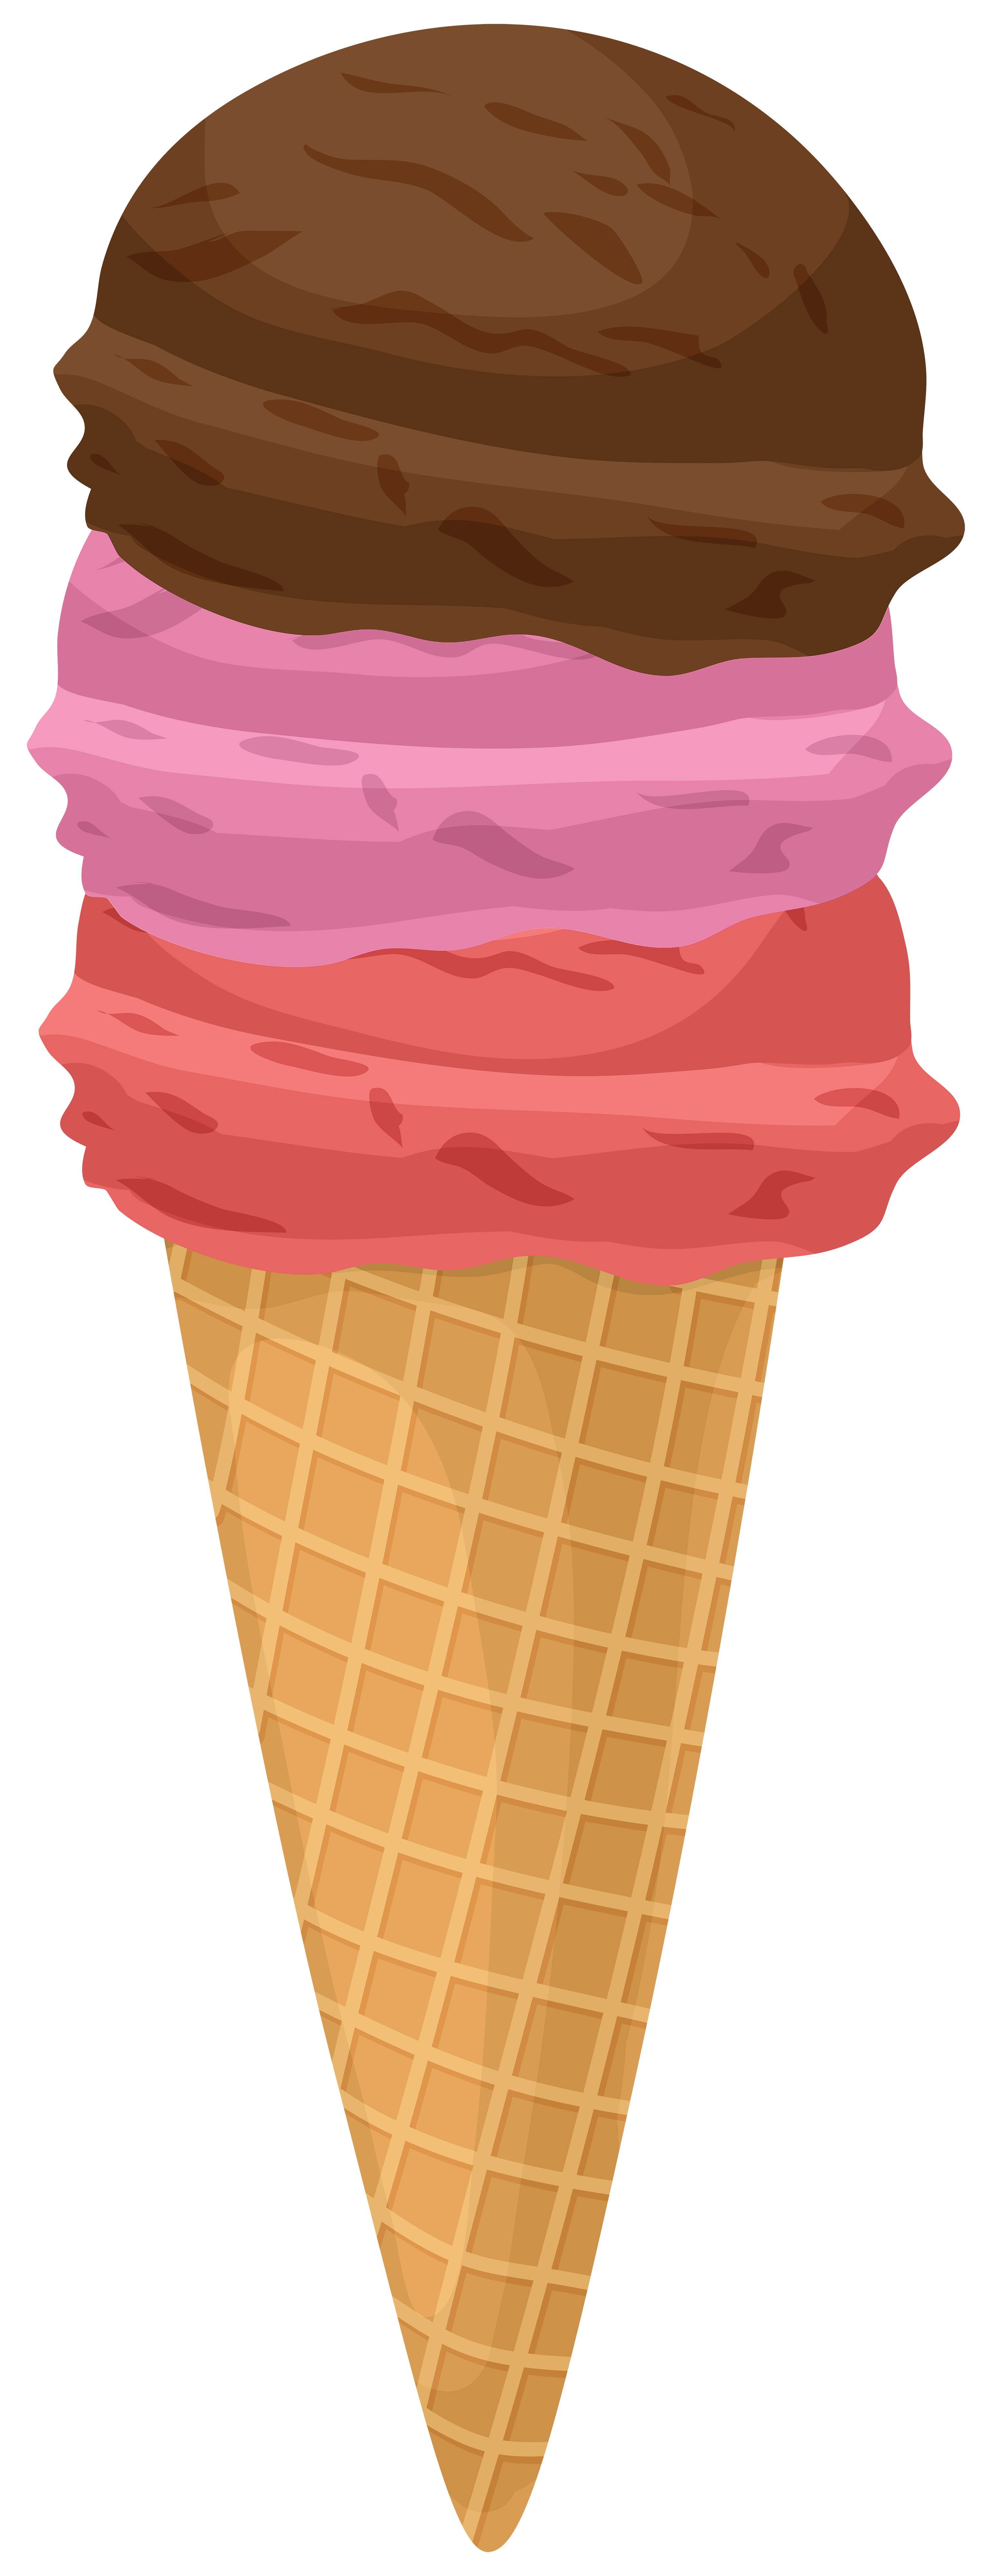 clipart summer ice cream